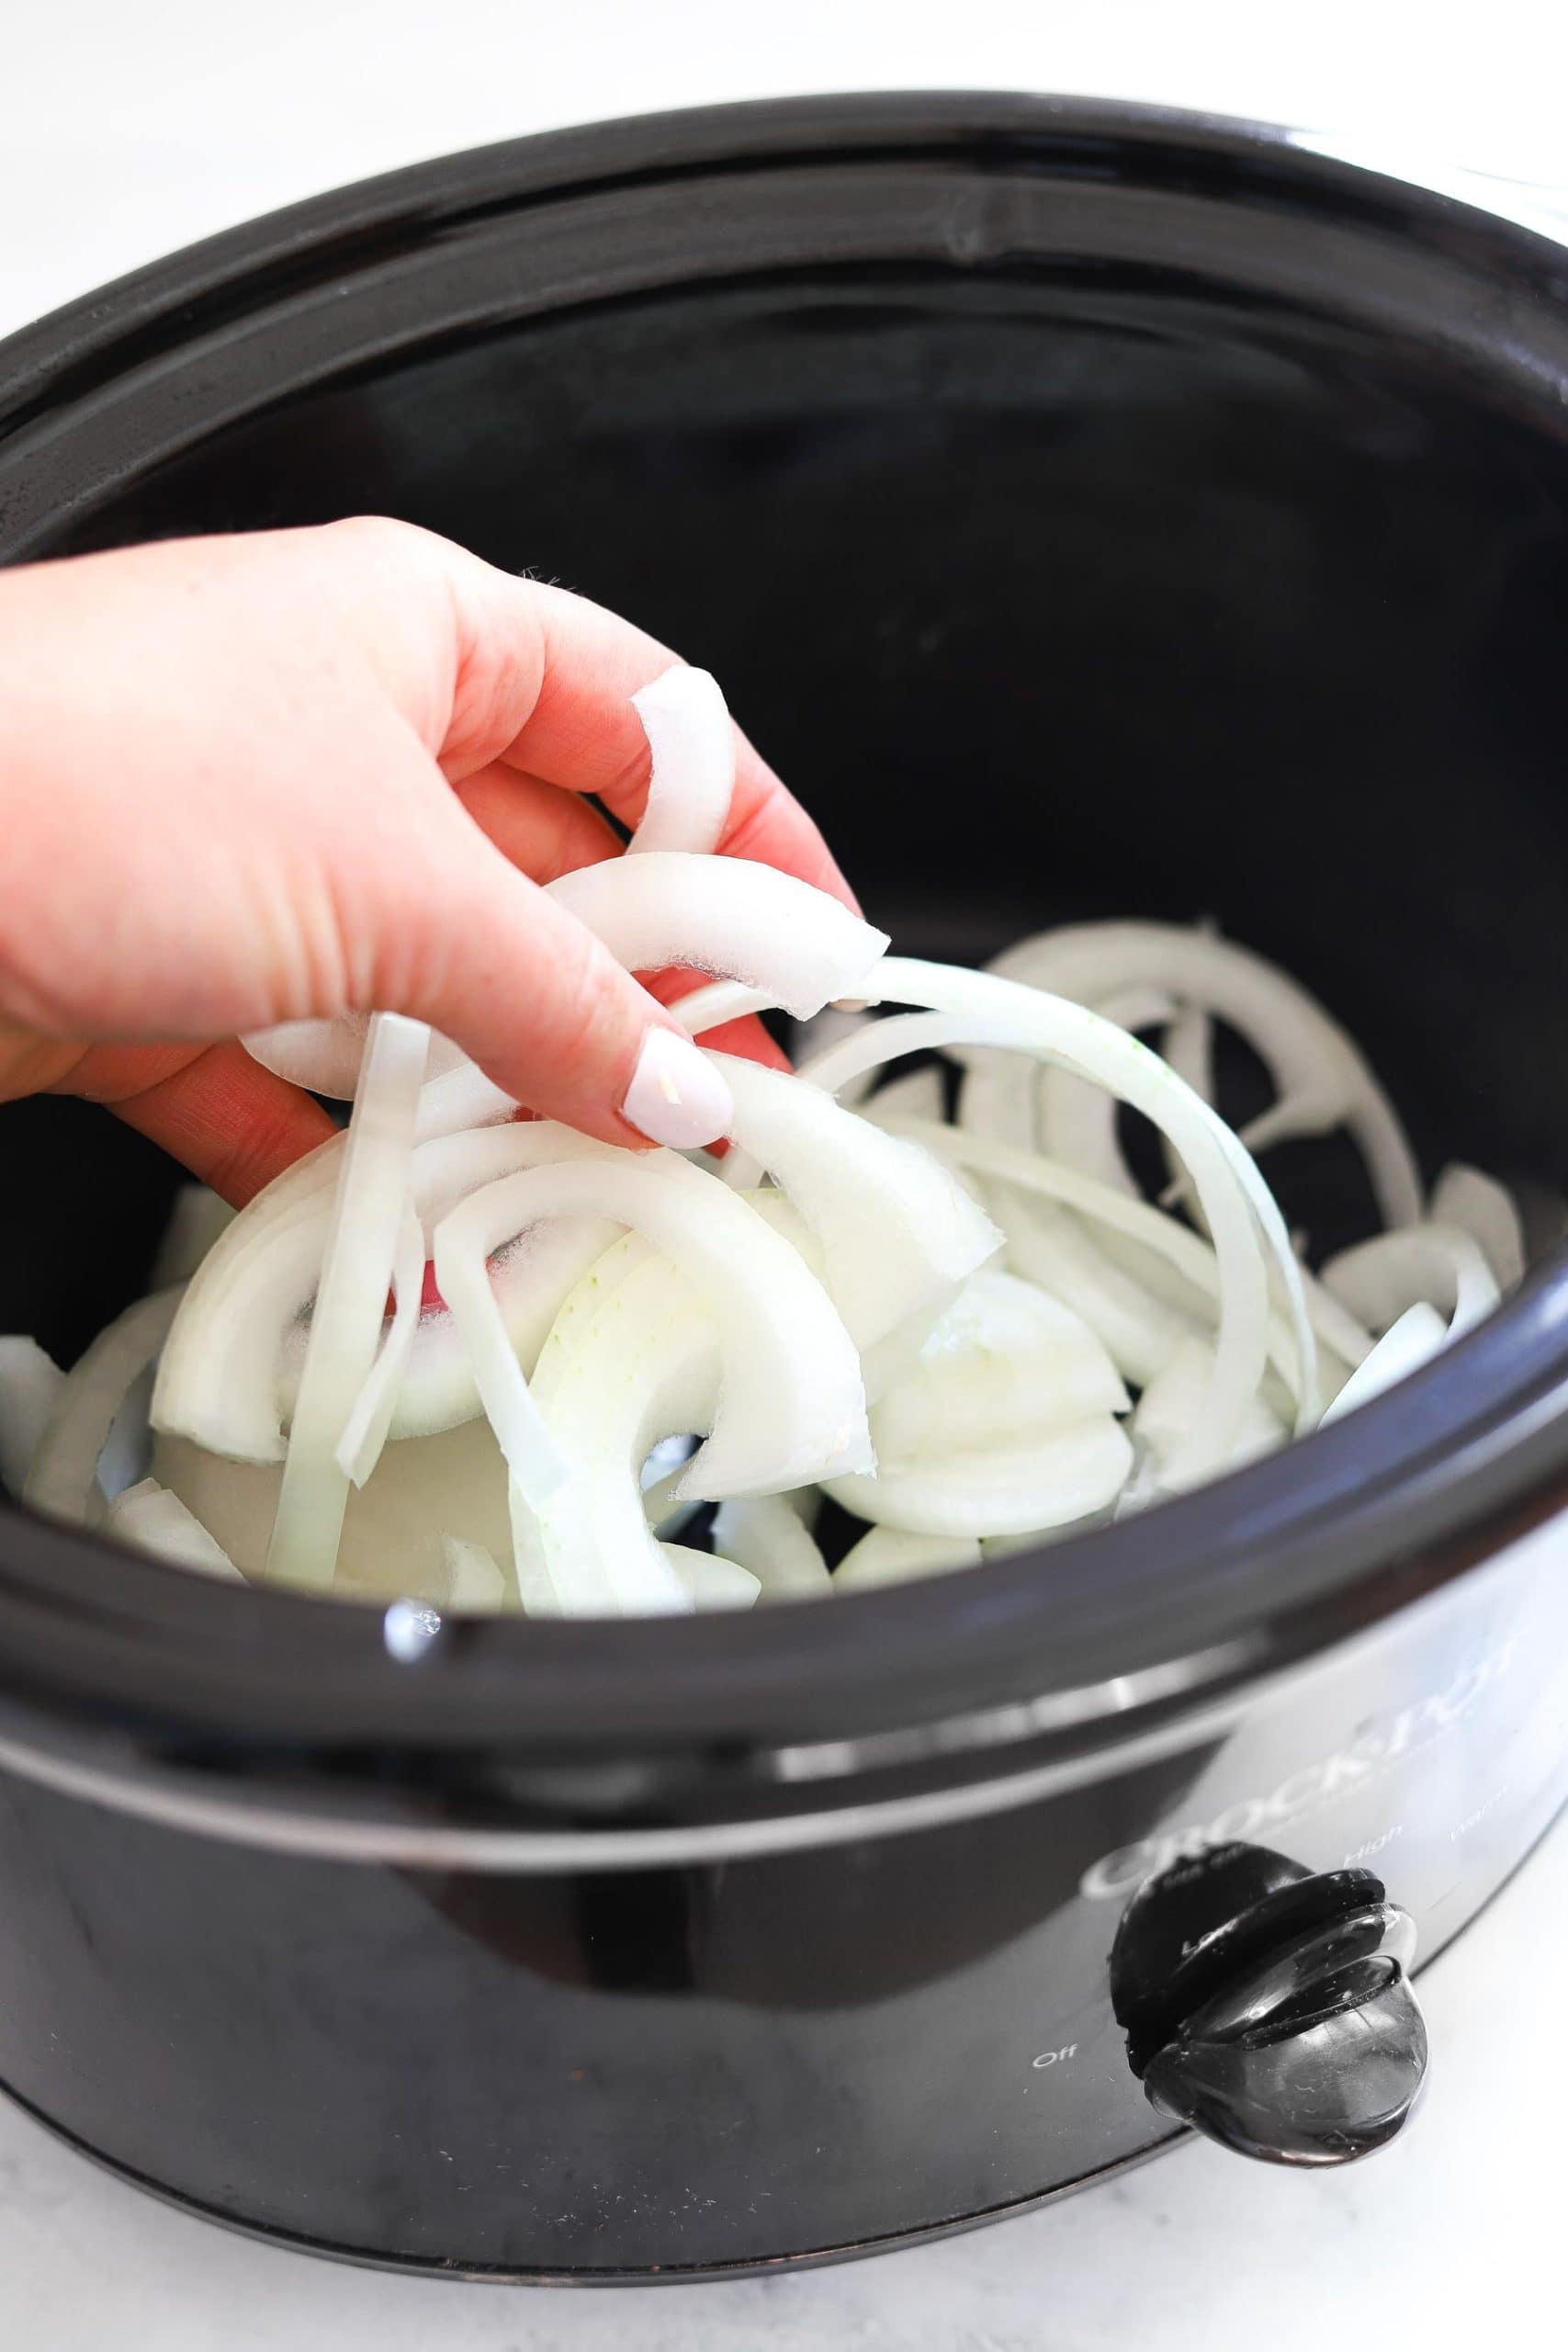 placing onions in crock pot